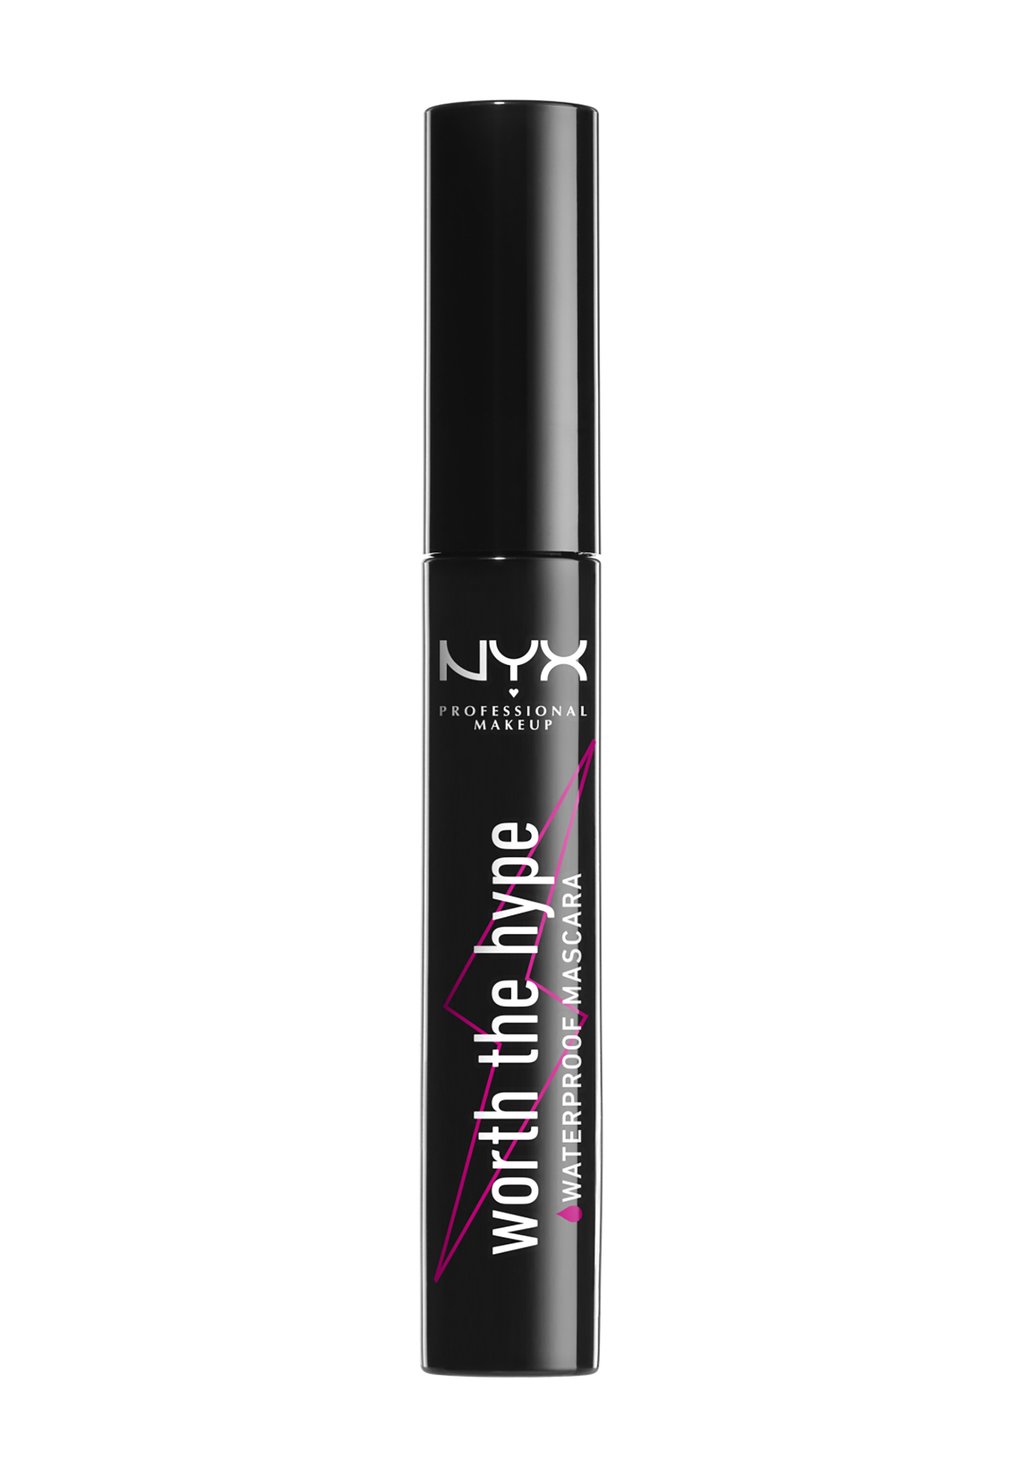 Тушь для ресниц Worth The Hype Waterproof Mascara Nyx Professional Makeup, цвет 7 black